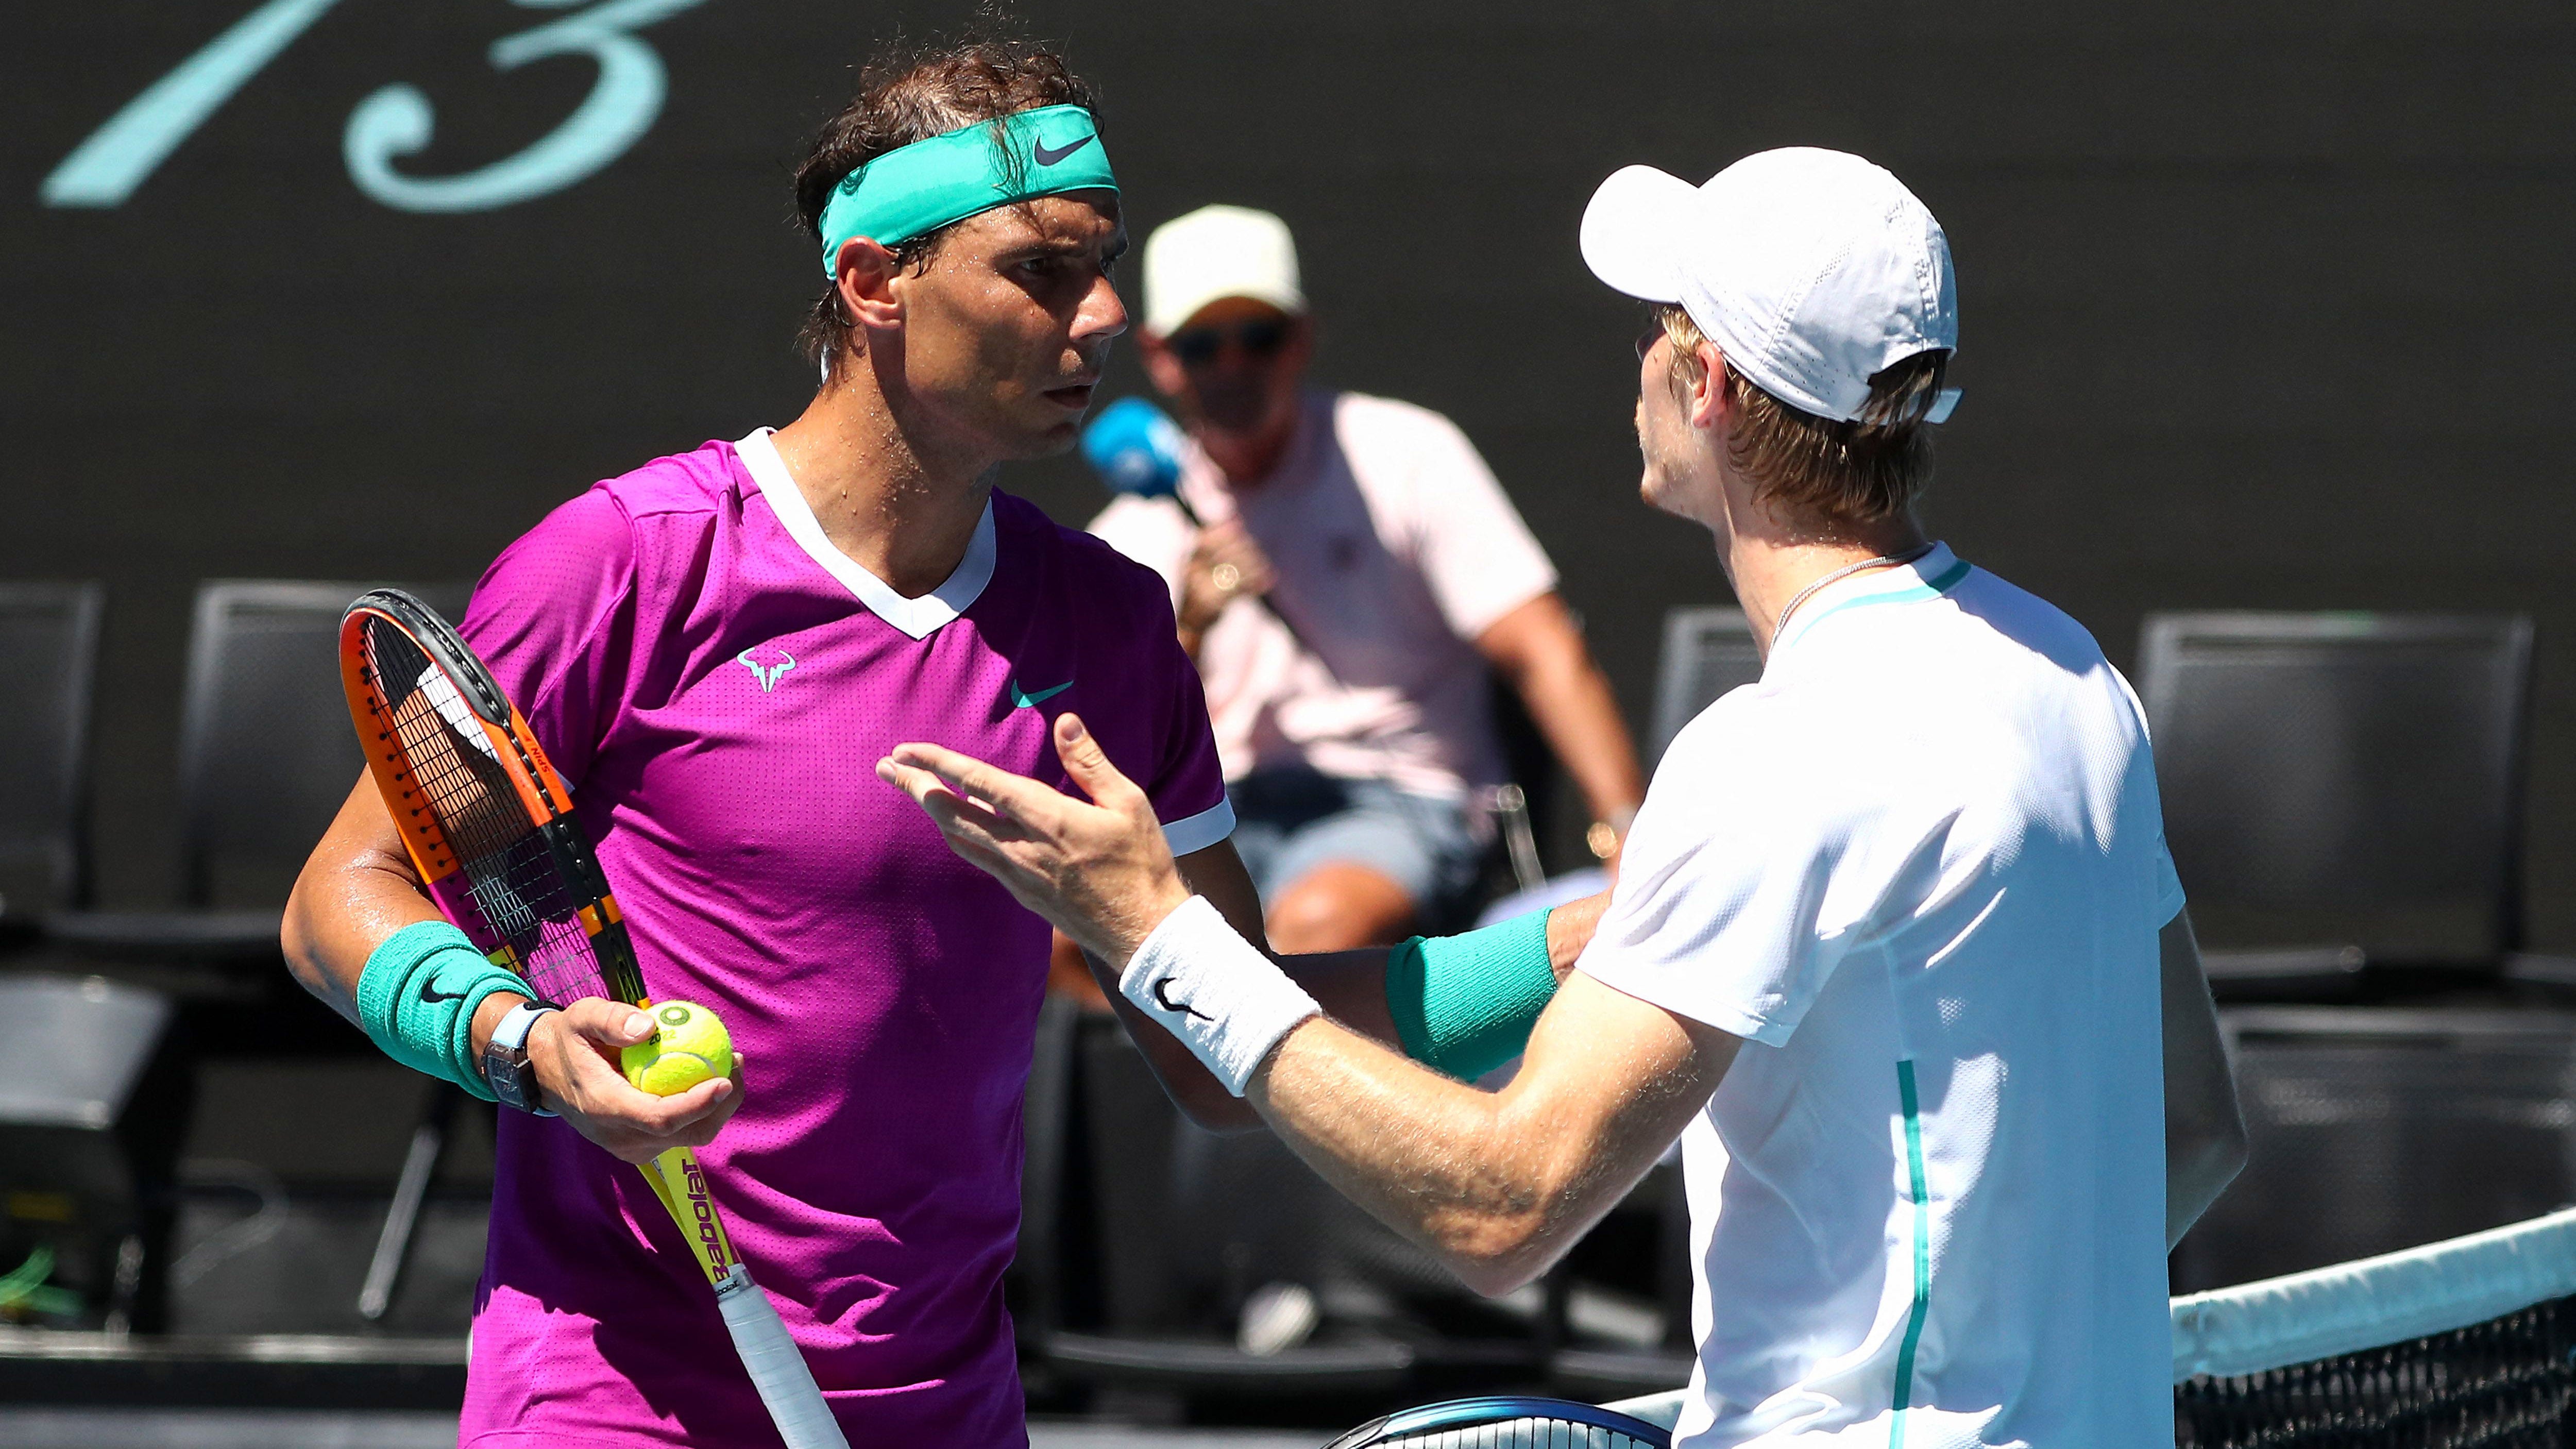 Denis Shapovalov blasts Australian Open umpire as ‘corrupt’ says Rafael Nadal ‘100%’ gets shown favoritism – Fox News